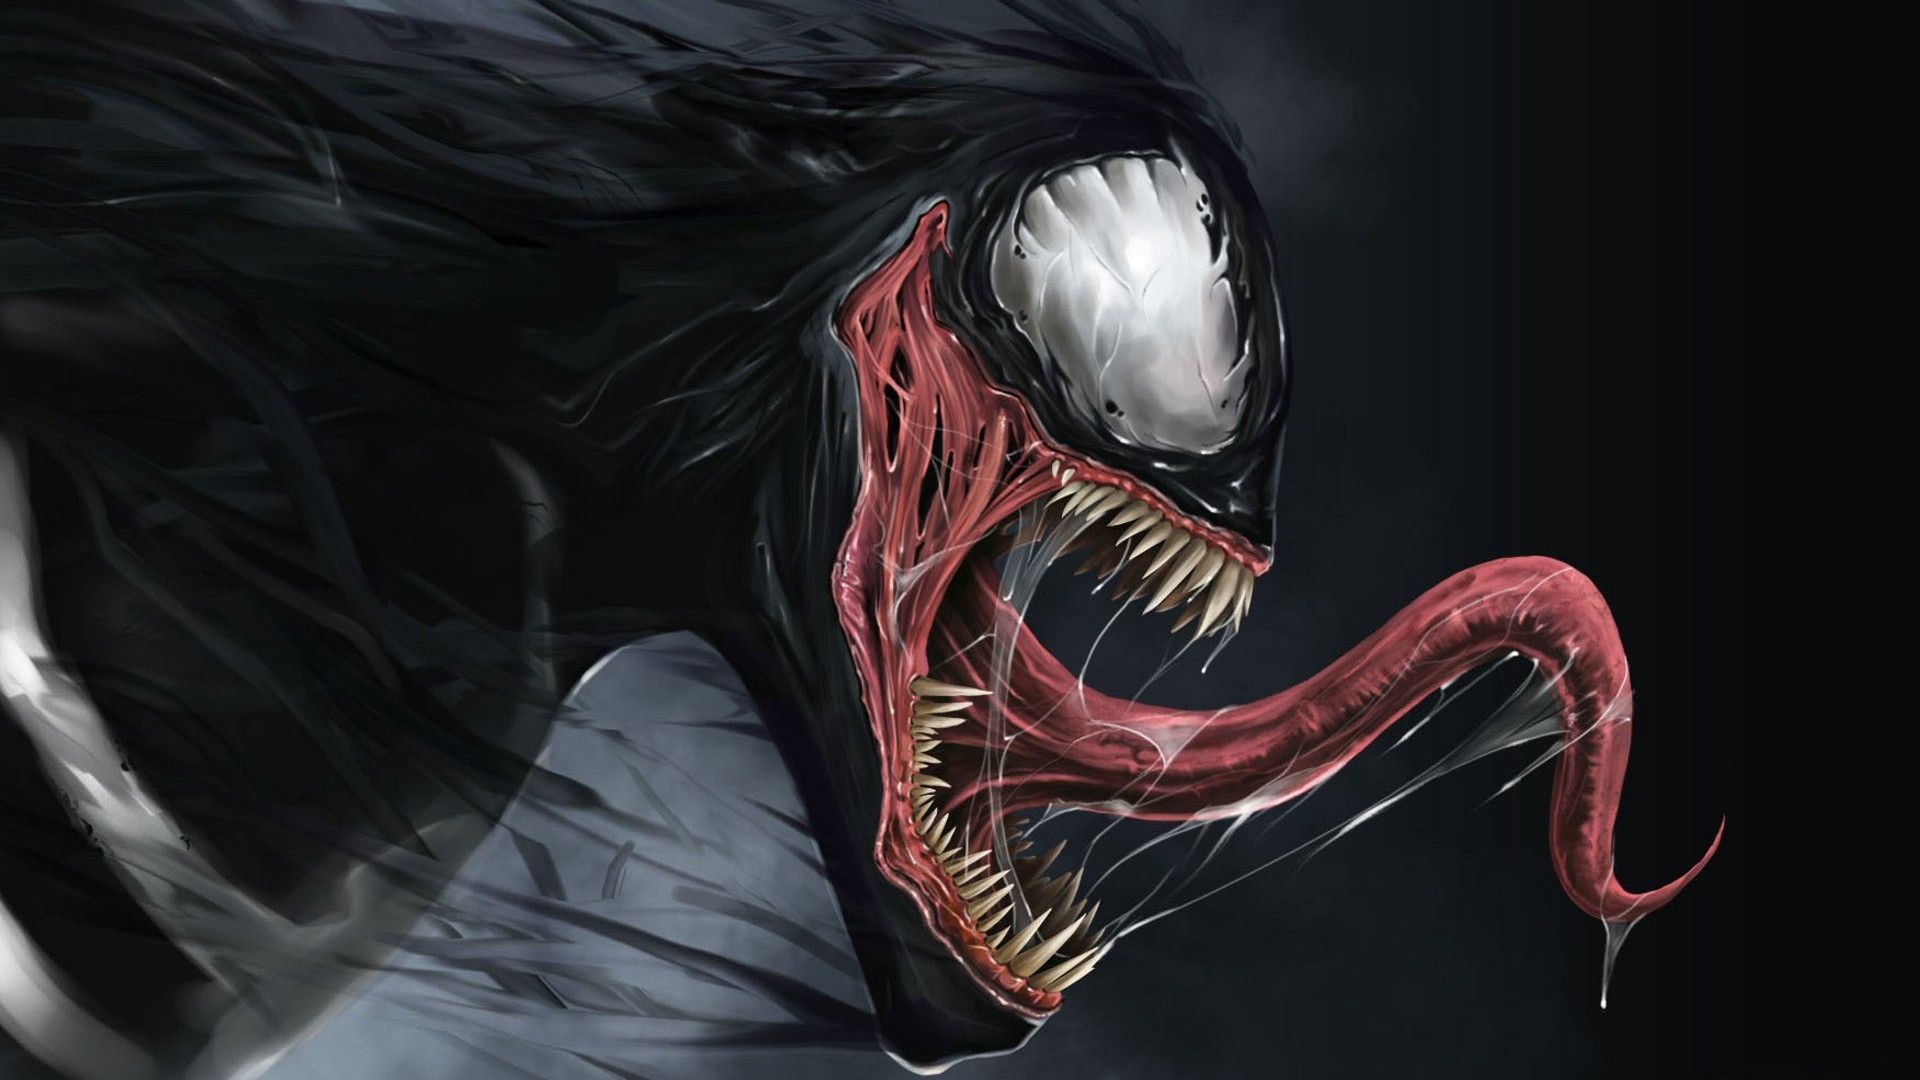 Download Wallpaper 1920x1080 Venom, Marvel comics, Spider-man Full ...